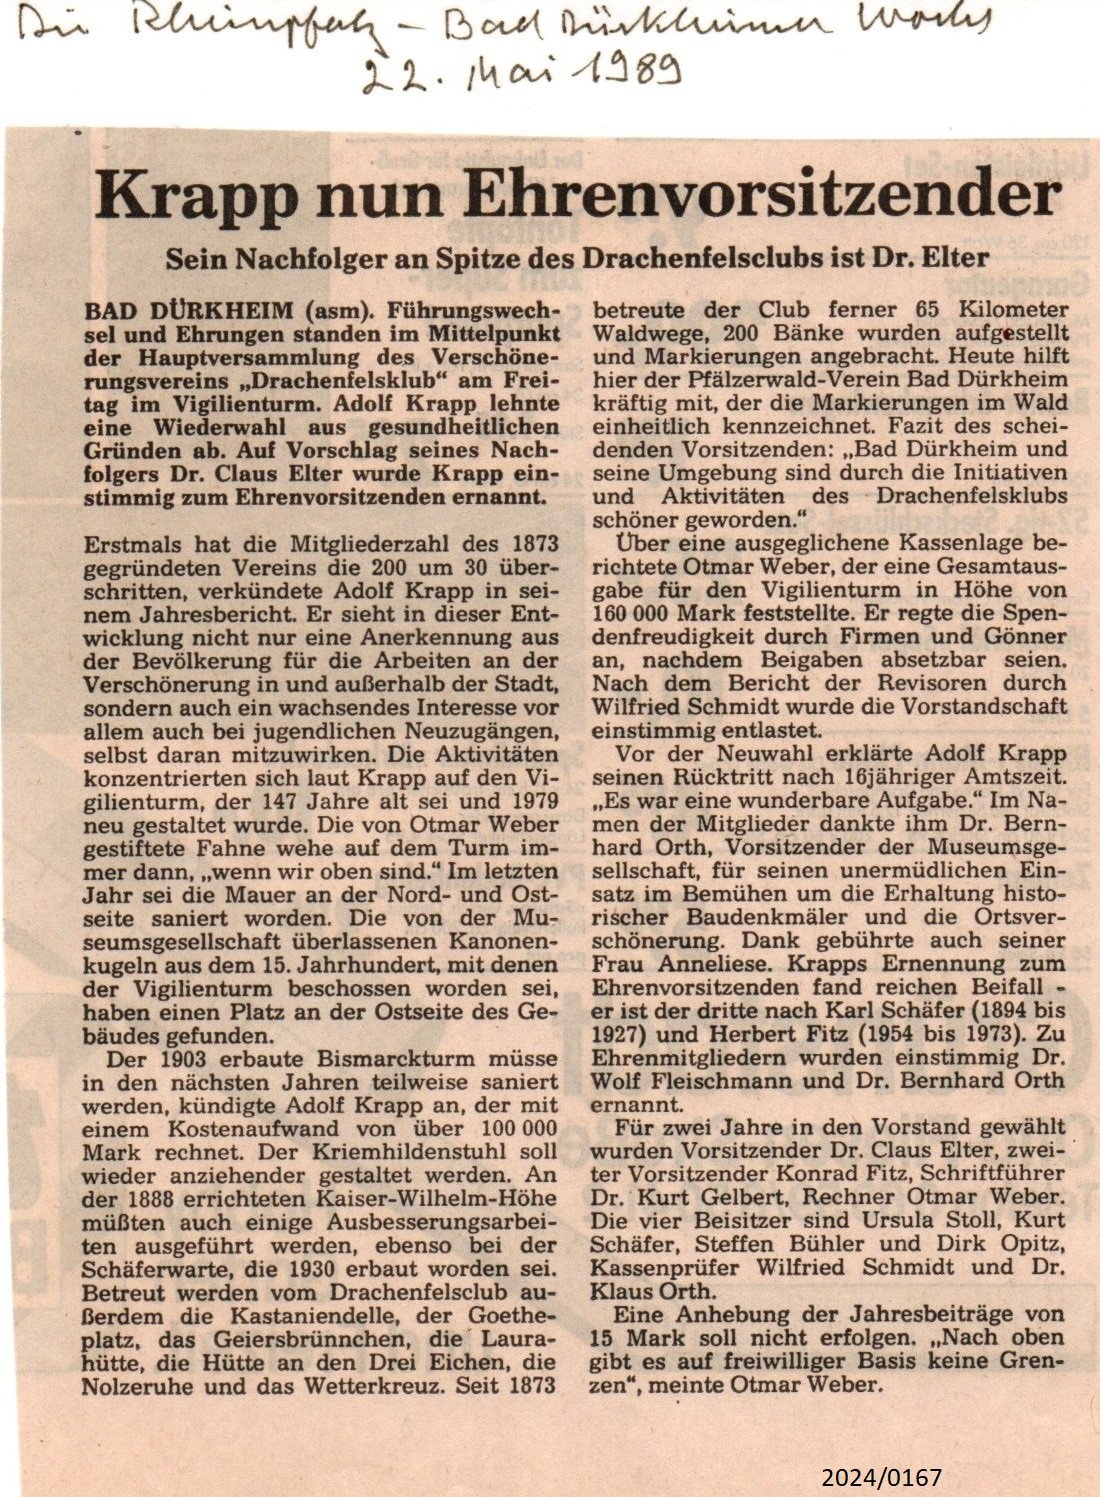 "Krapp nun Ehrenvorsitzender" - Drachenfelsclub (Stadtmuseum Bad Dürkheim im Kulturzentrum Haus Catoir CC BY-NC-SA)